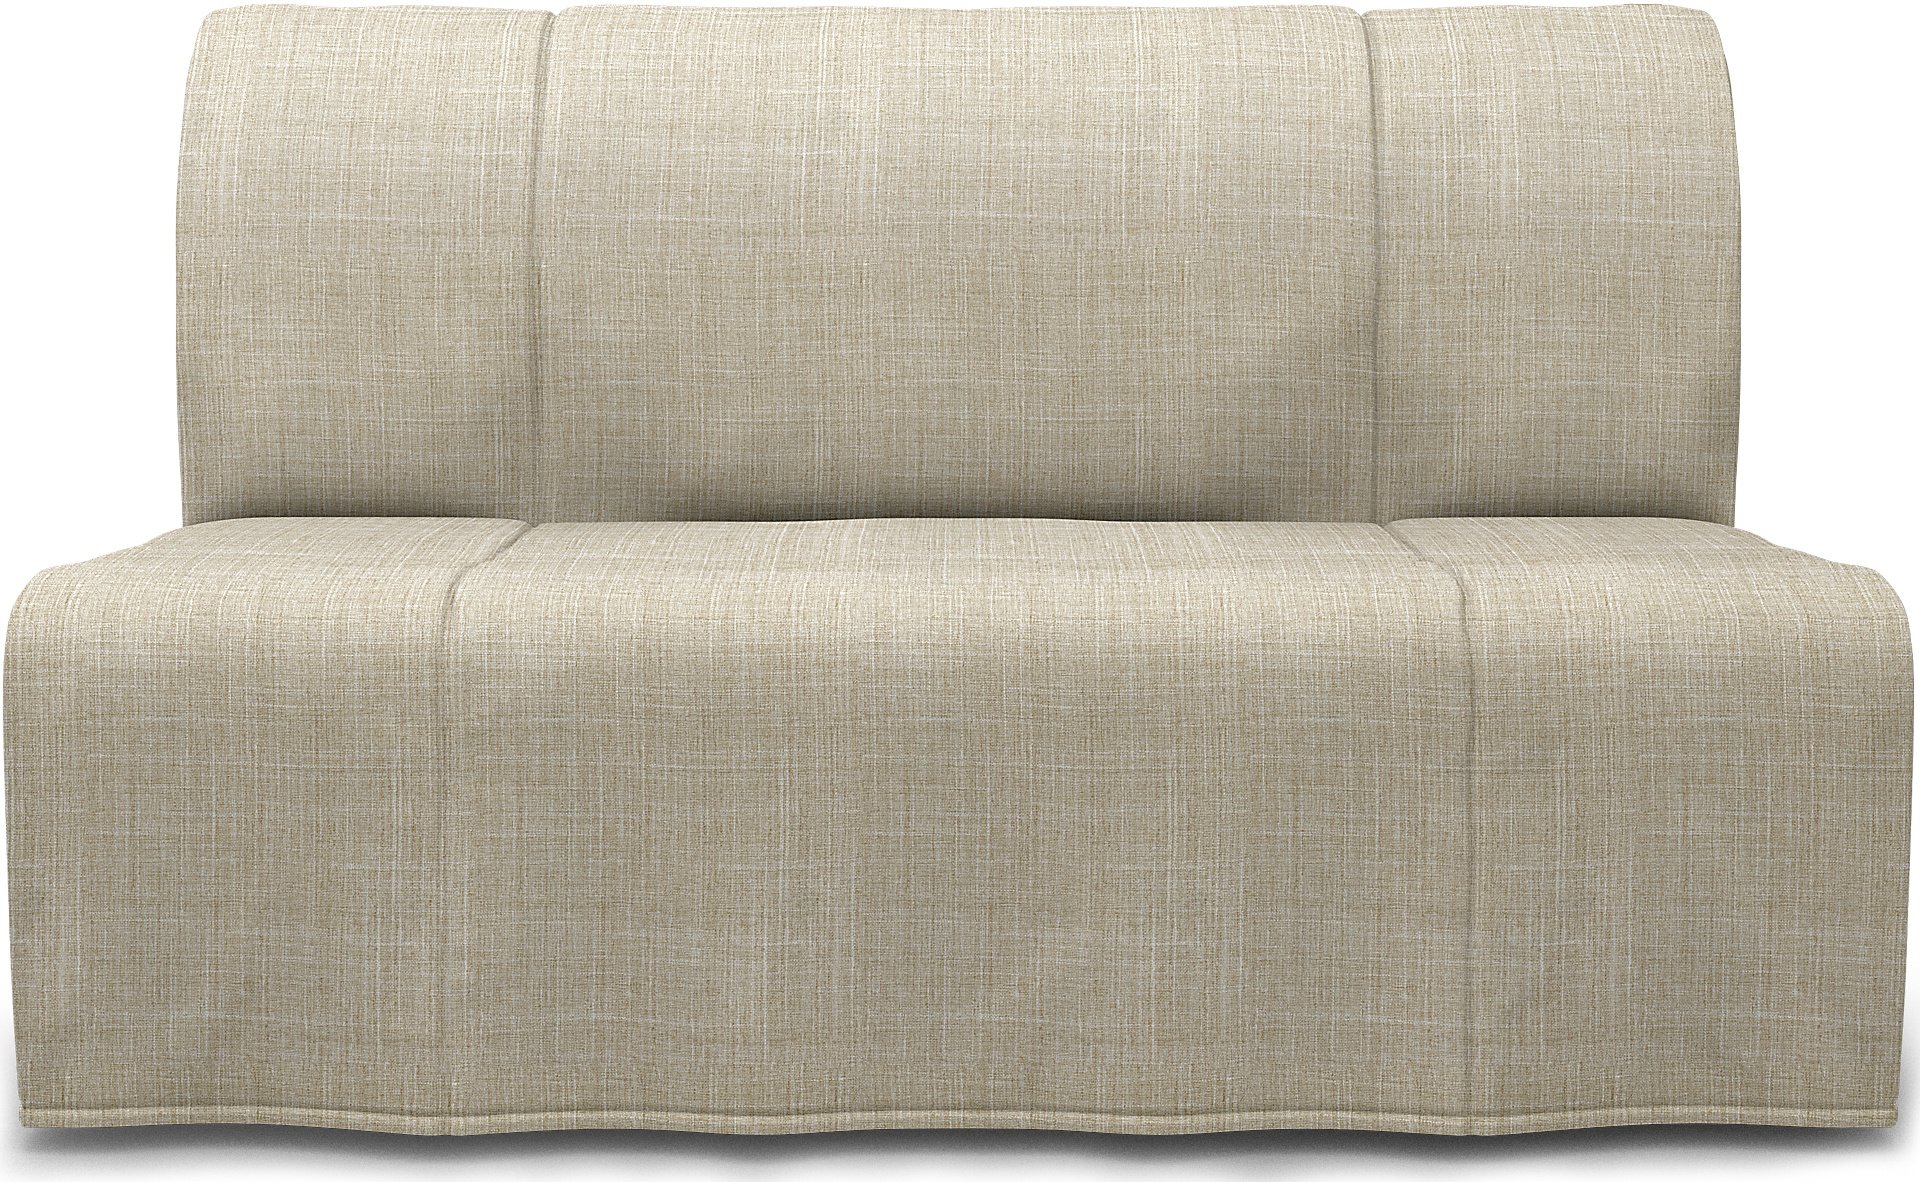 IKEA - Lycksele 2 Seater Bedsofa, Sand Beige, Boucle & Texture - Bemz